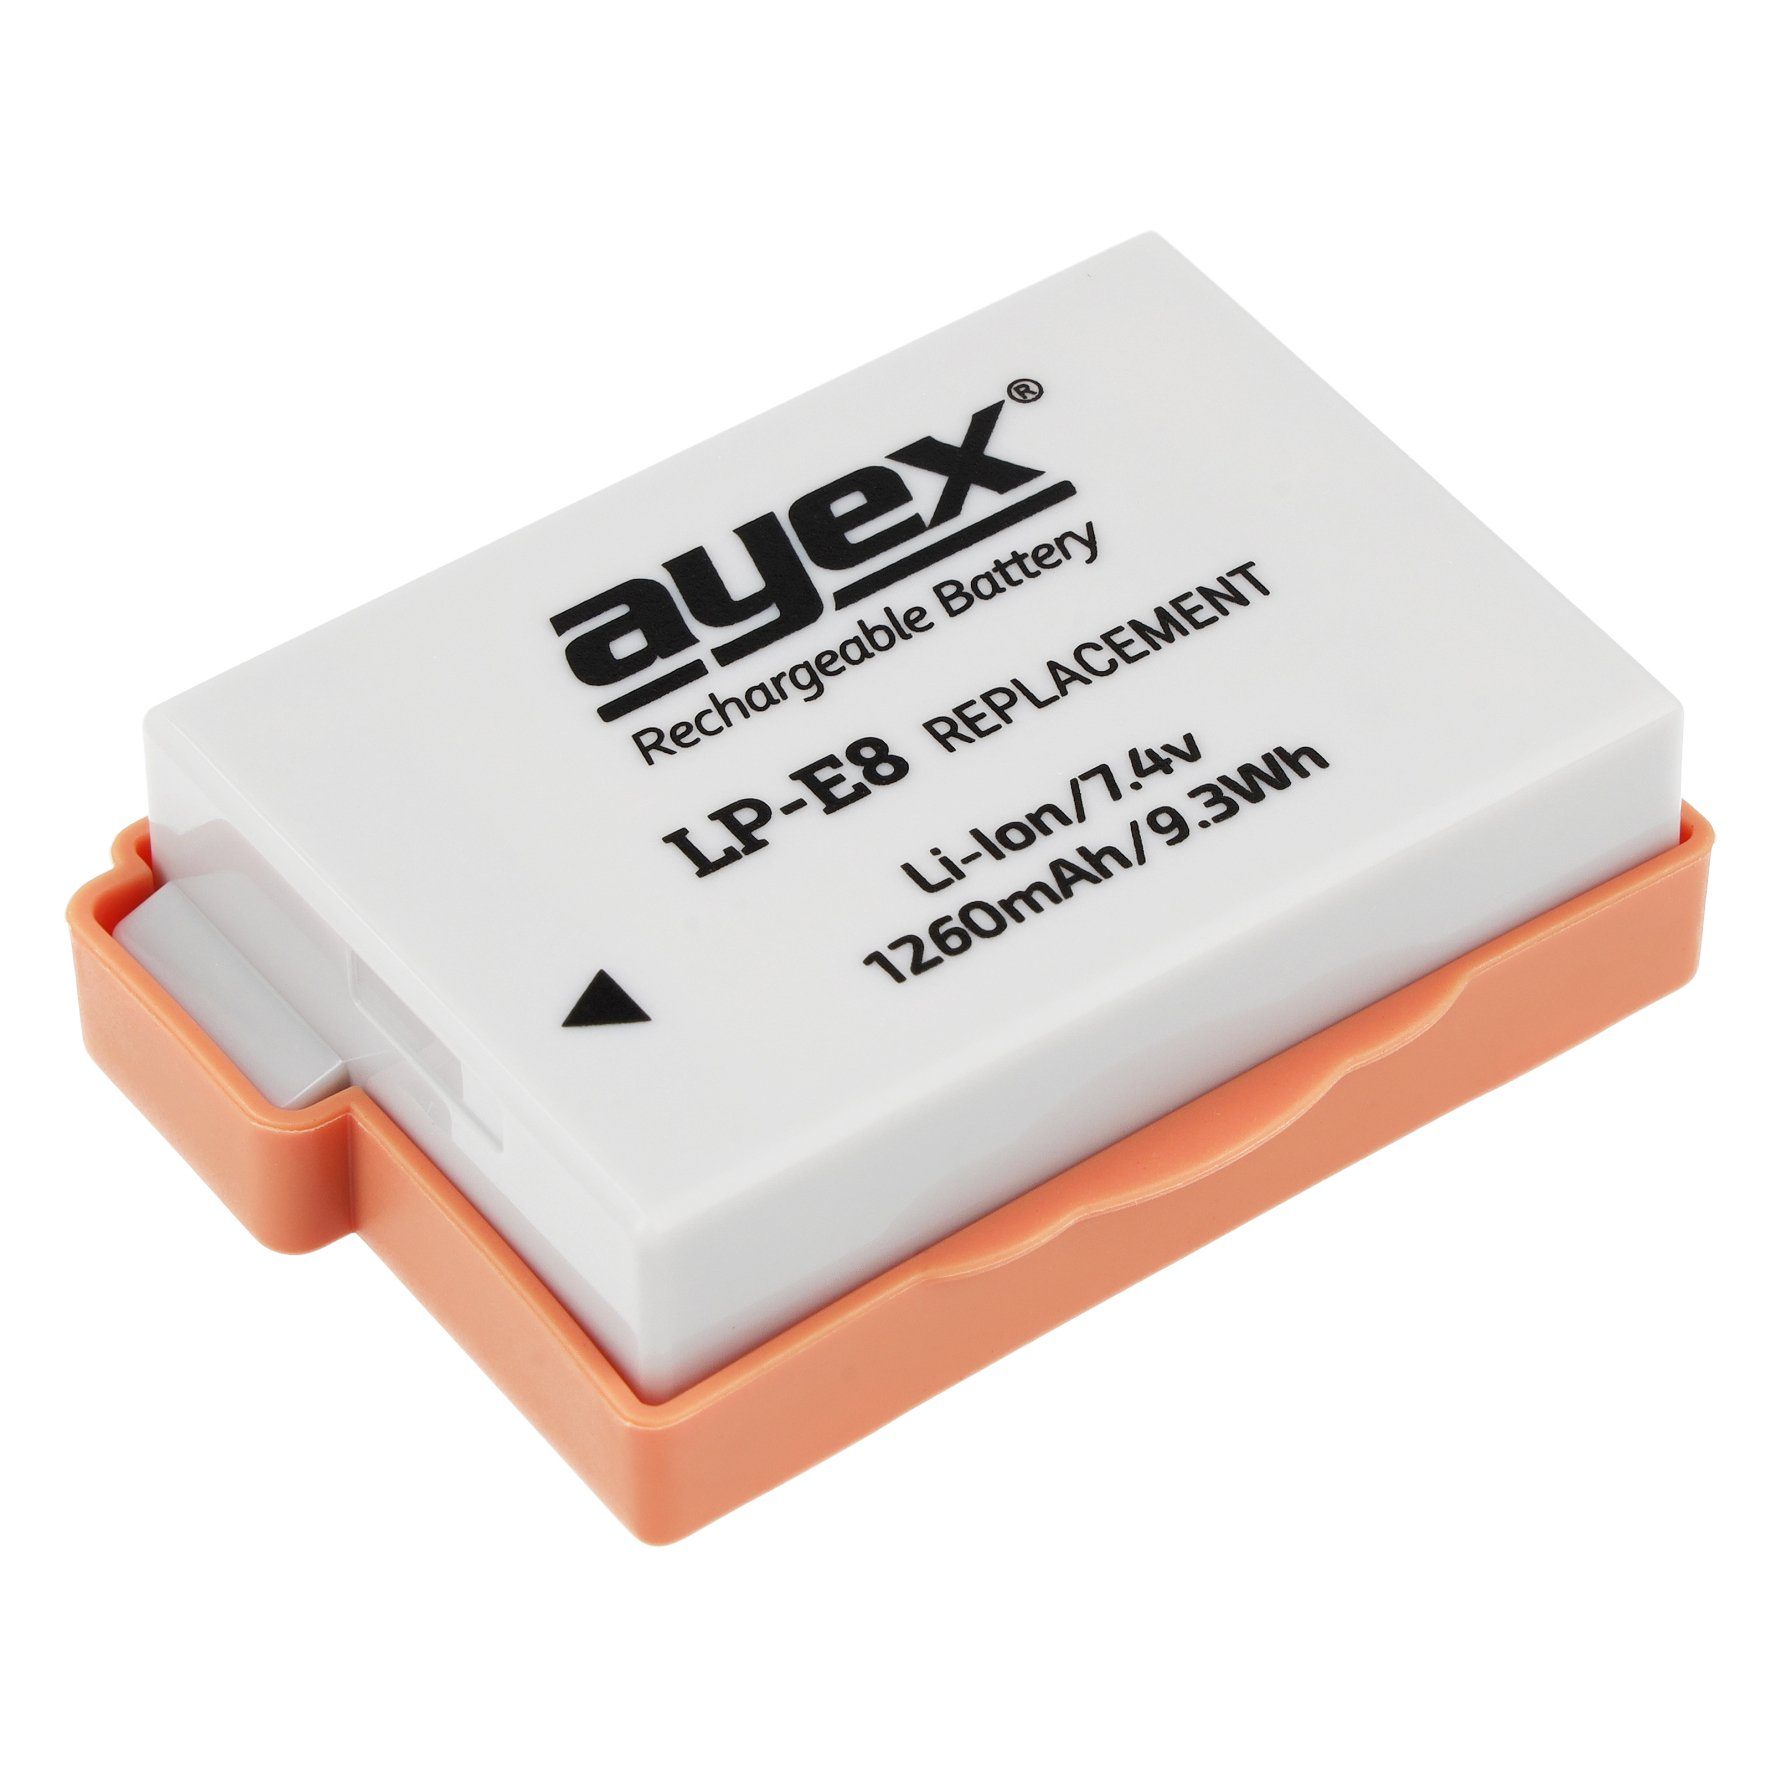 ayex LP-E8 Li-Ion-Akku für z.B. langlebig für Kamera-Akku EOS Canon Leistungsstark